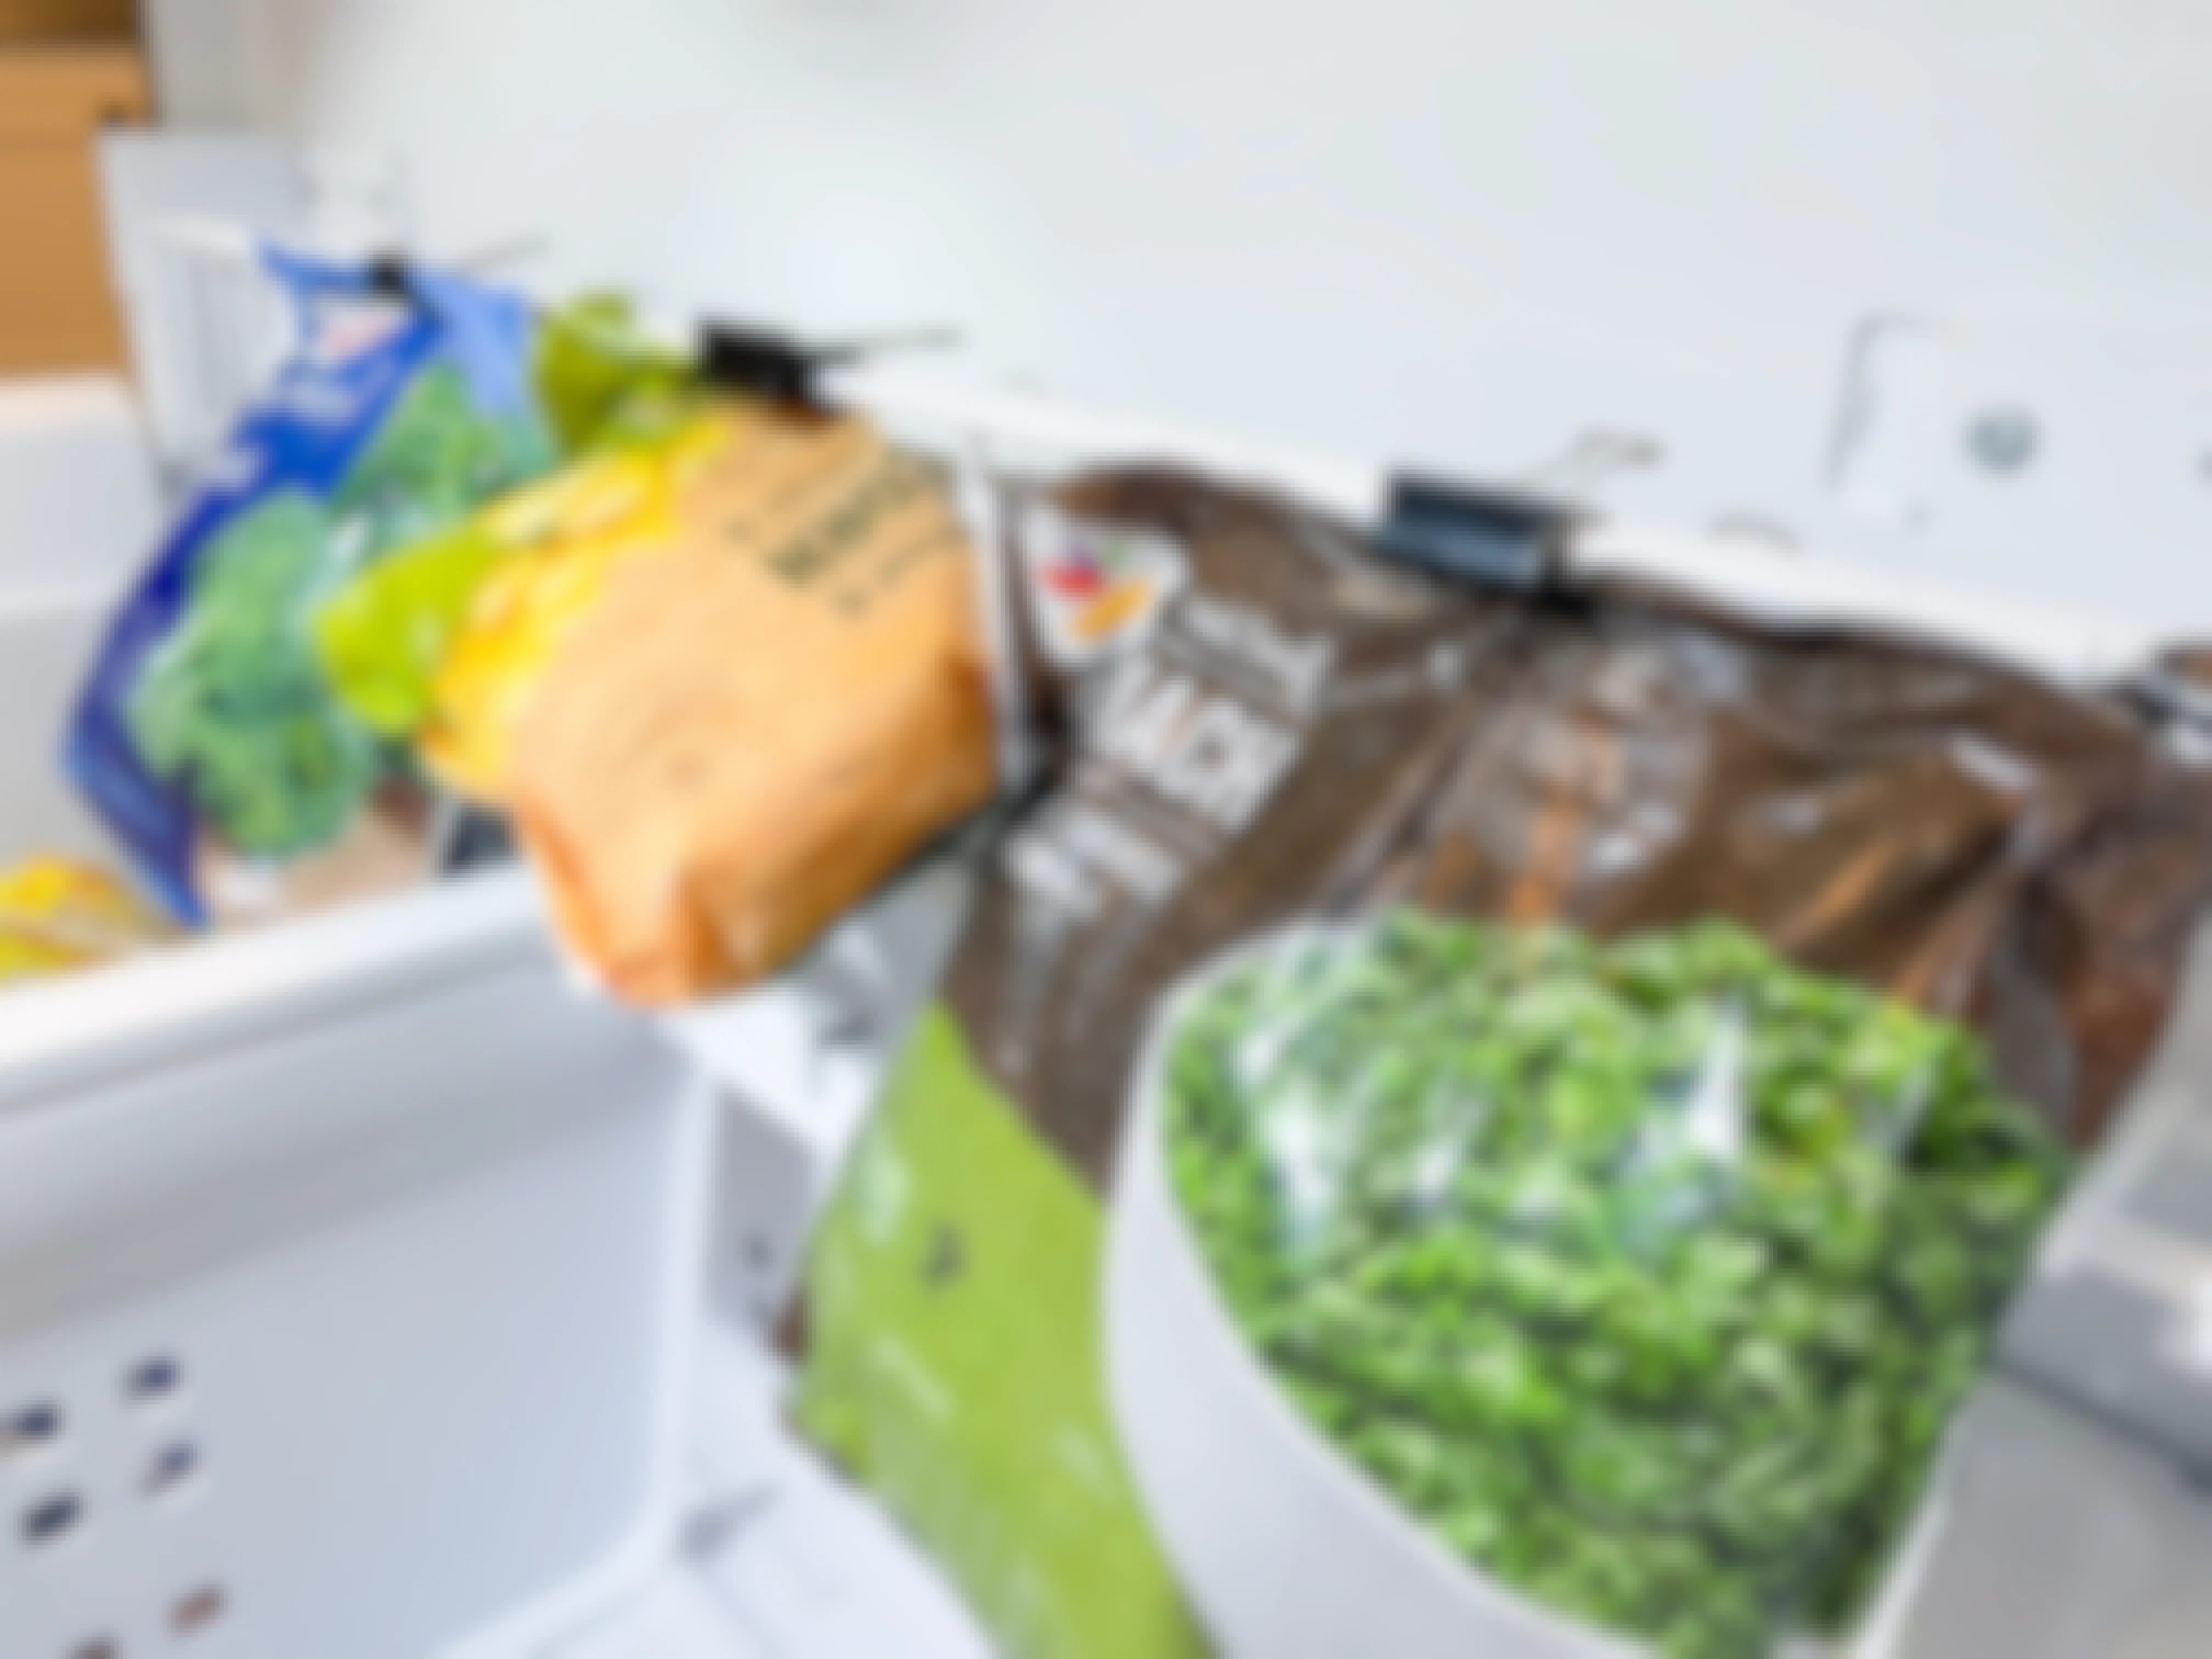 binder clip organization hack showing frozen veggies hanging from binder clips in freezer